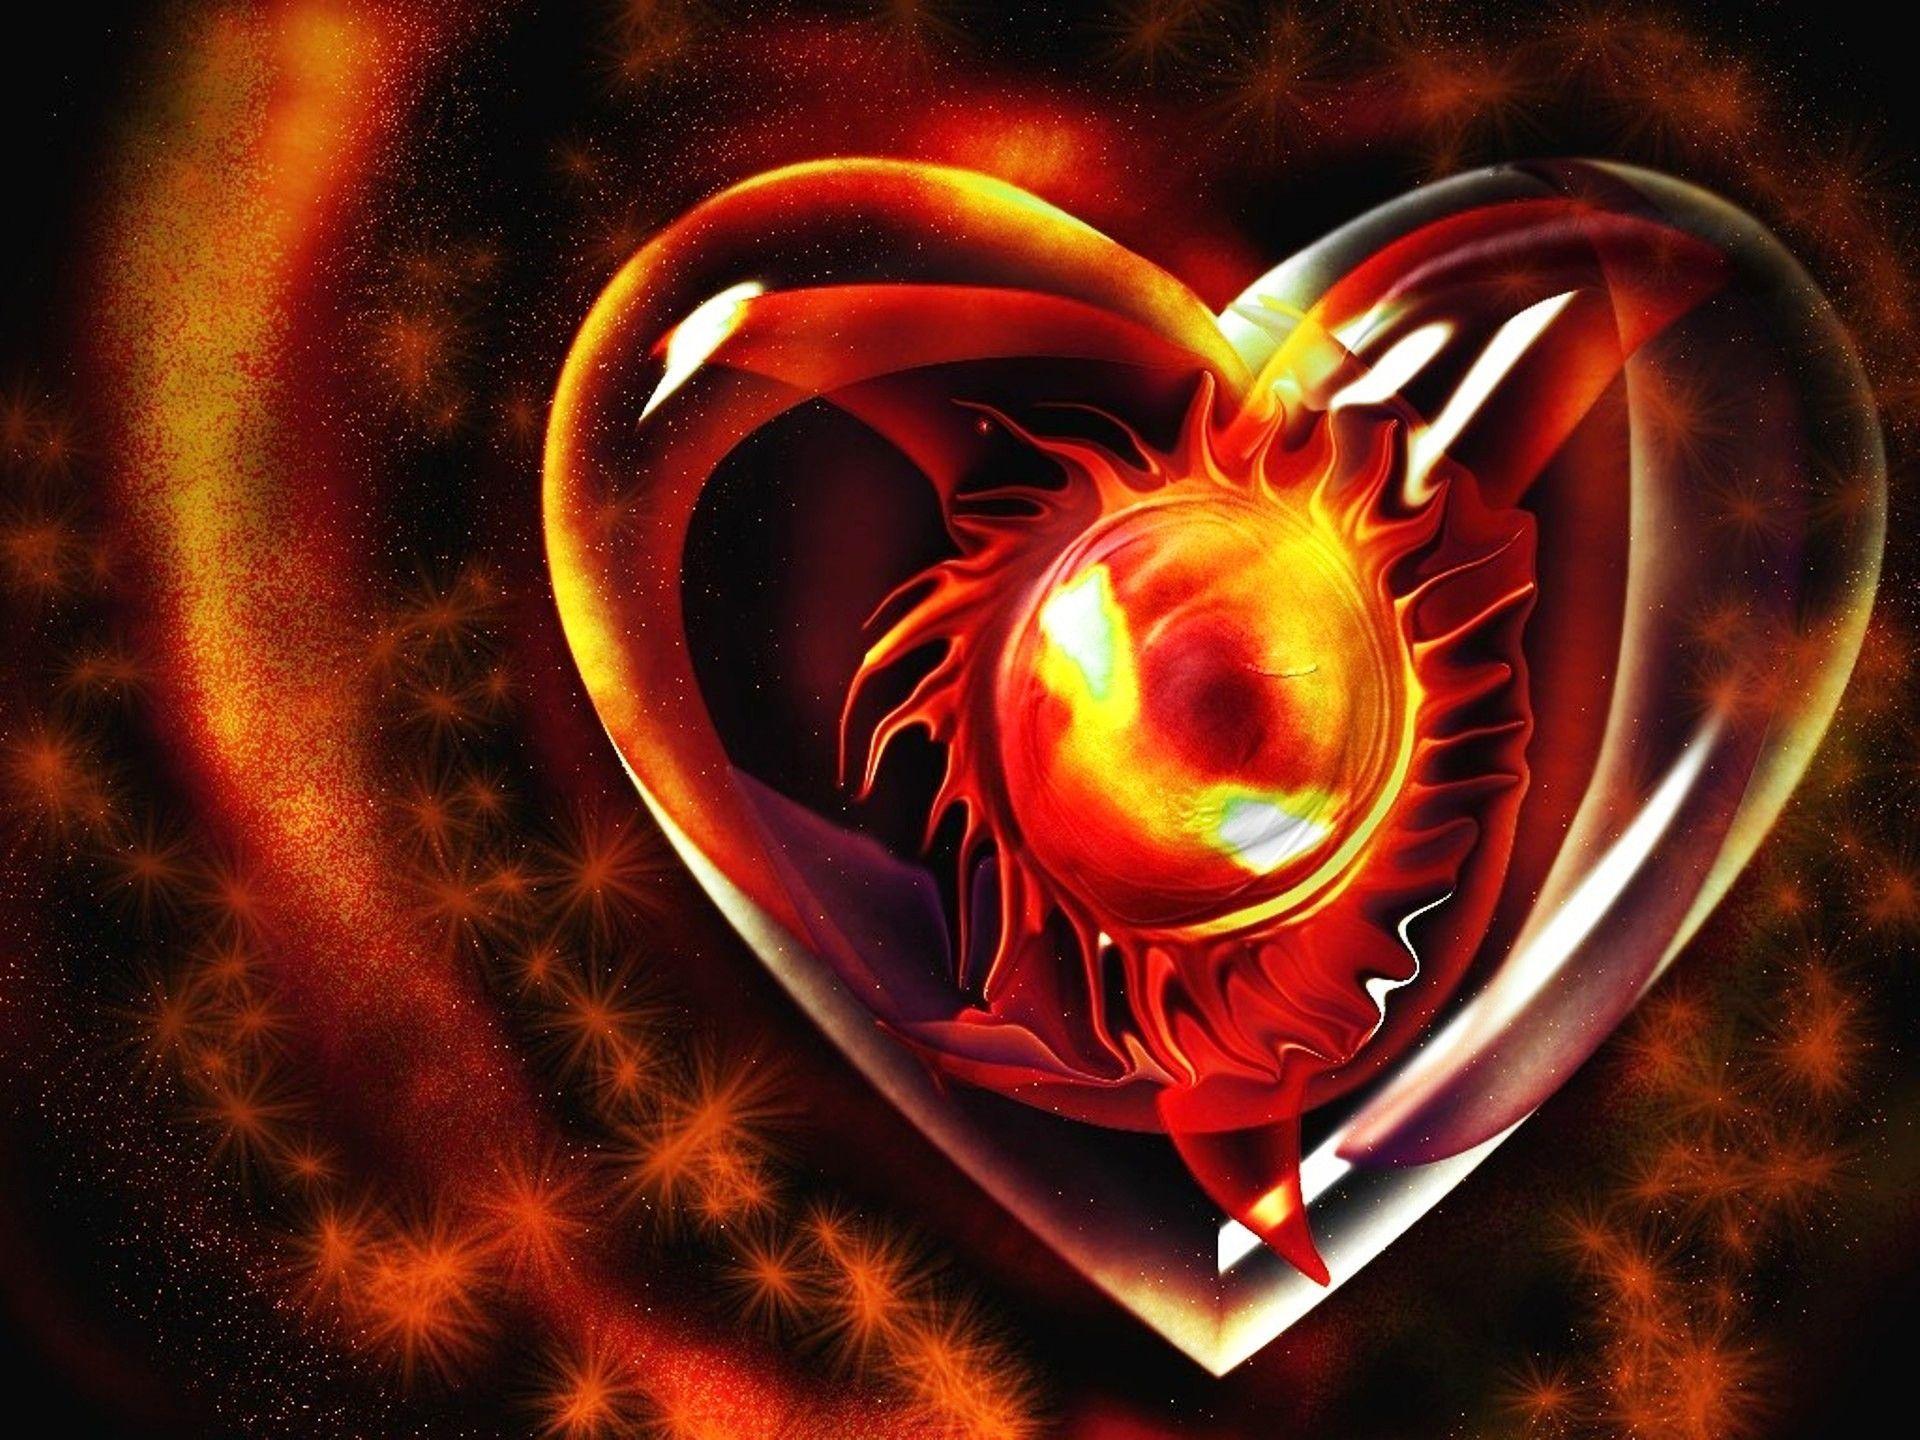 3D Love Hearts Wallpaper Image New